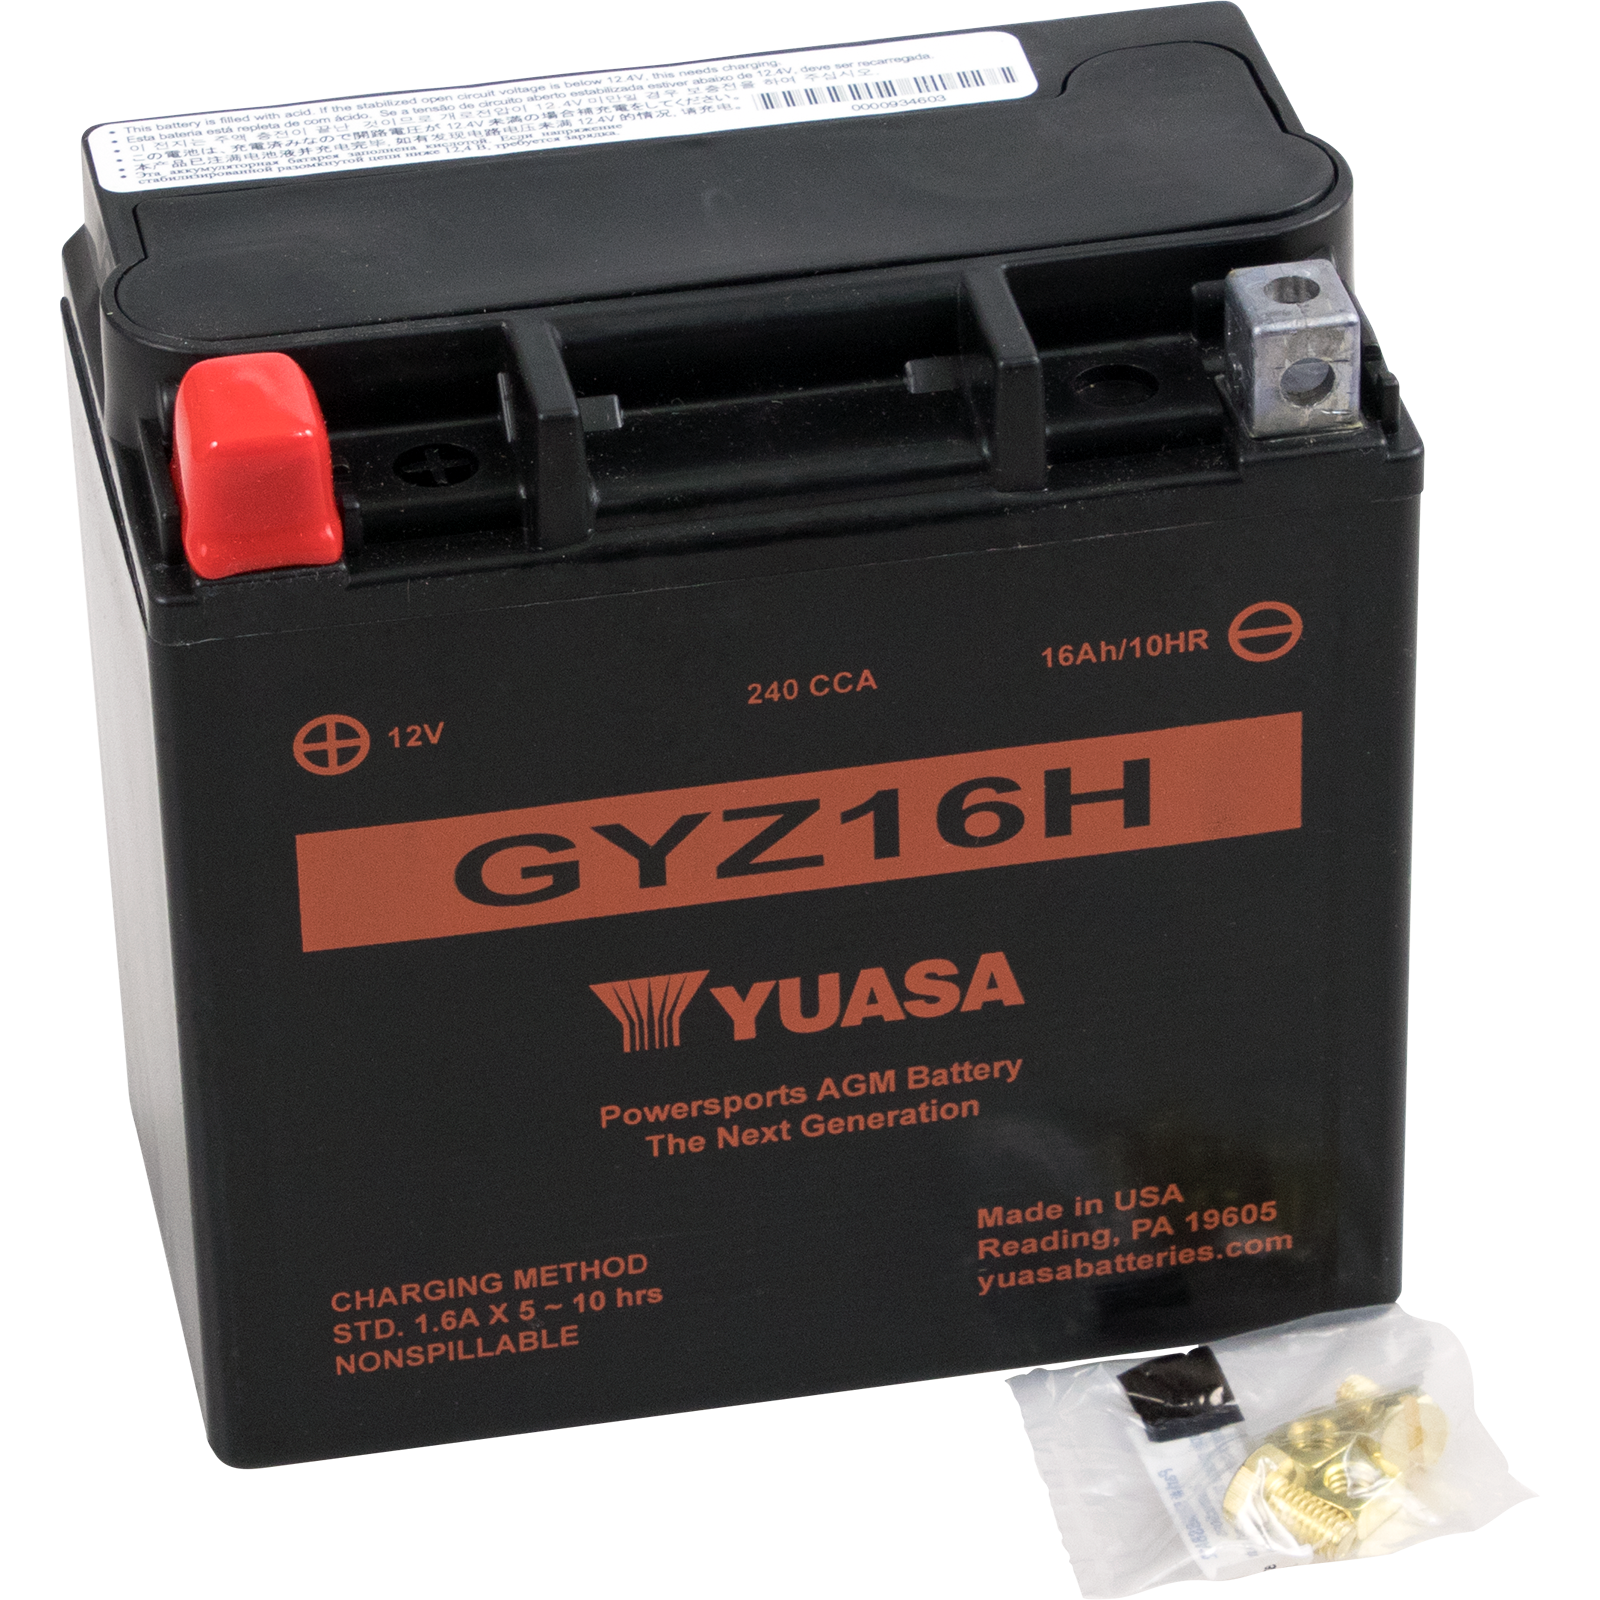 YUASA GYZ Factory-Activated AGM Maintenance-Free Battery